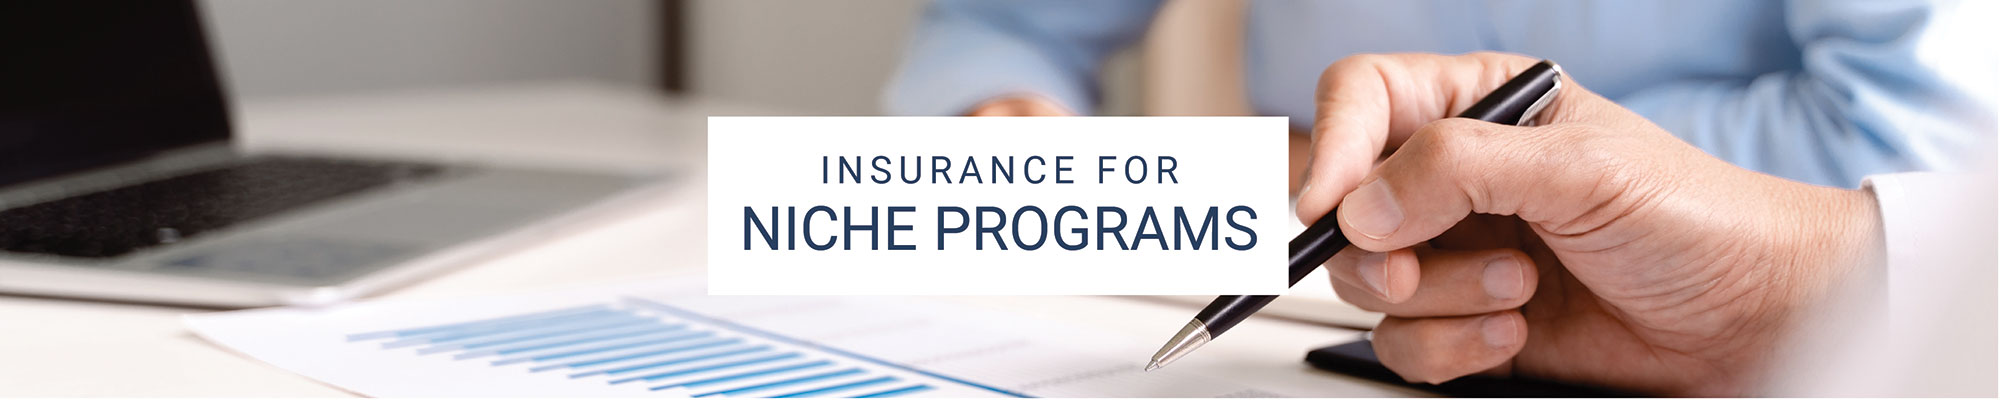 Insurance for Niche Programs